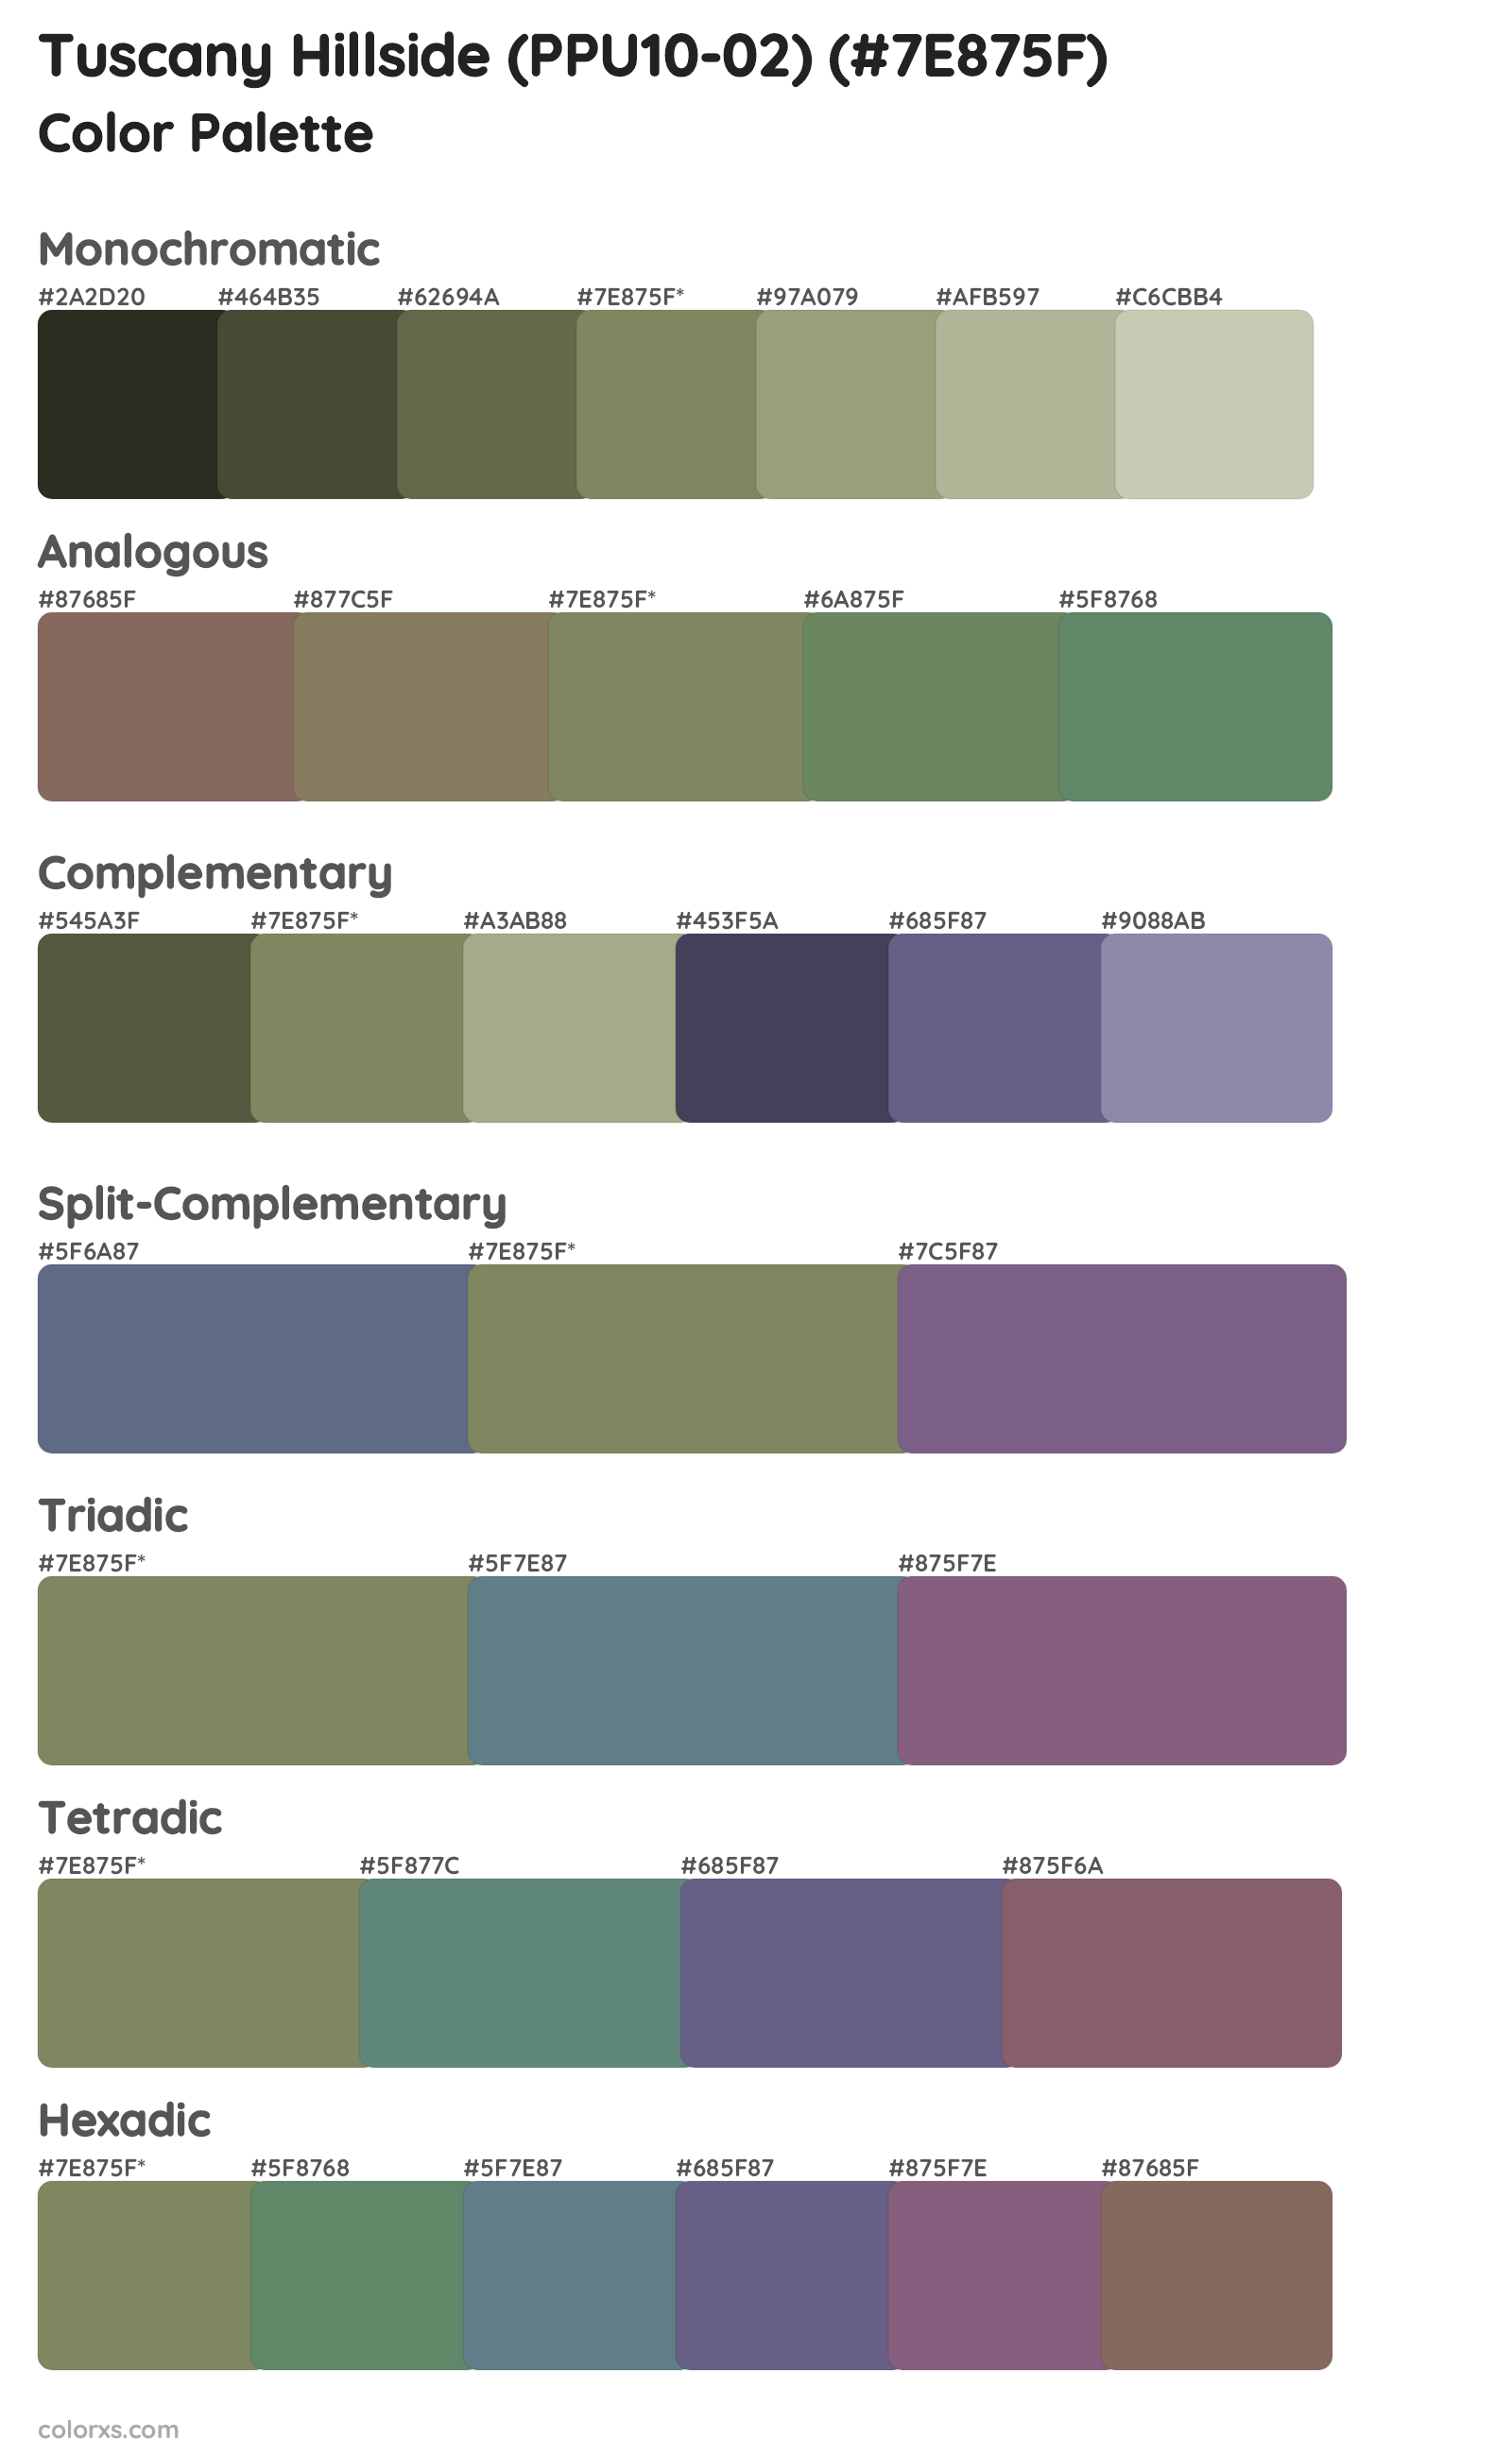 Tuscany Hillside (PPU10-02) Color Scheme Palettes